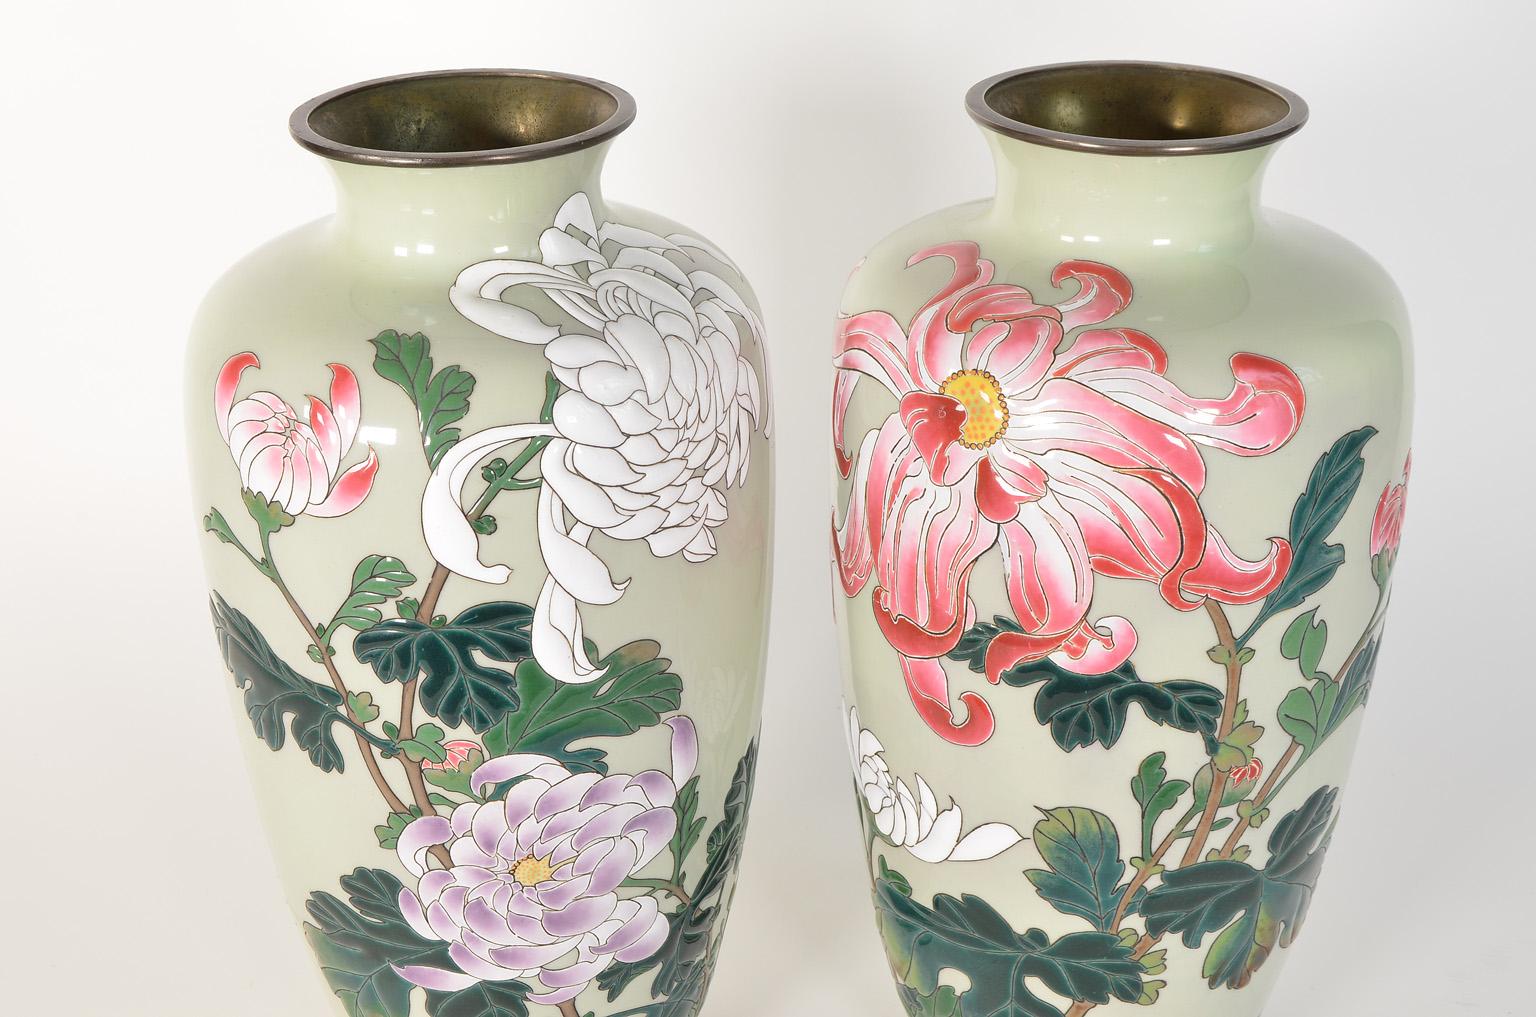 Pair of Japanese vases 19th century bronze enamel Cloisonne flower decor Meiji period. Measure: H 30 cm.

 